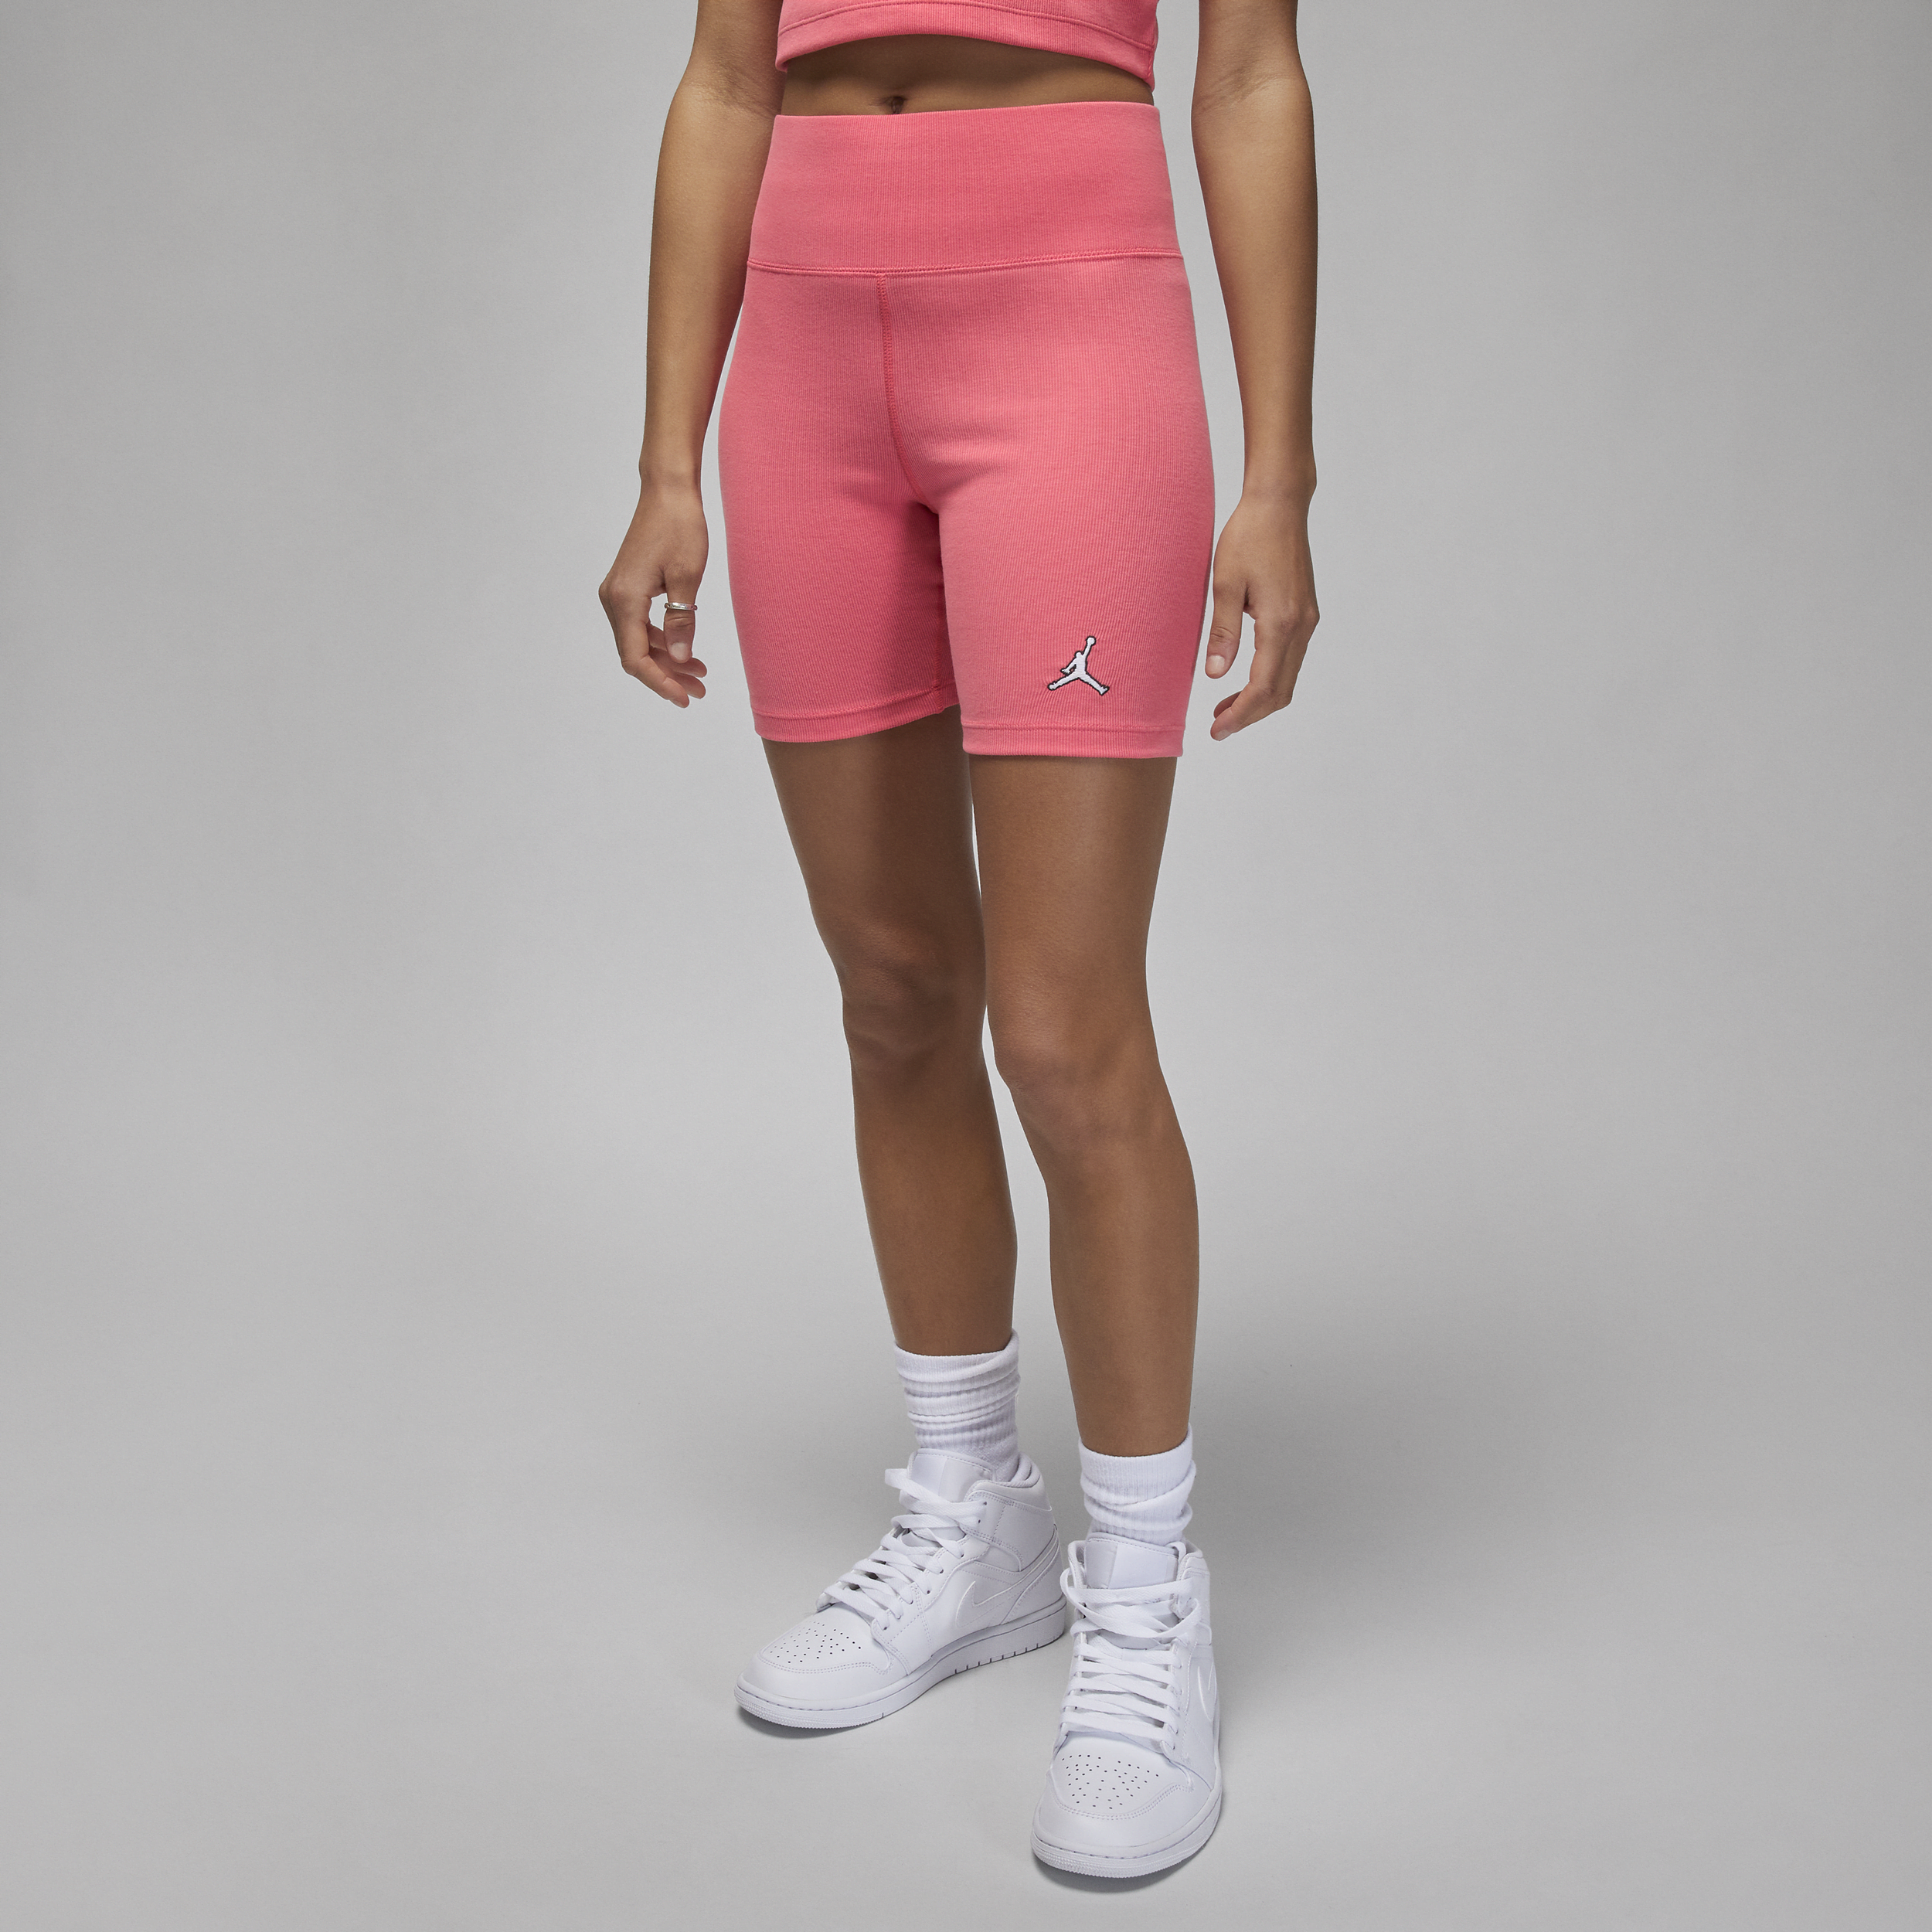 Jordan-cykelshorts i rib til kvinder - Pink